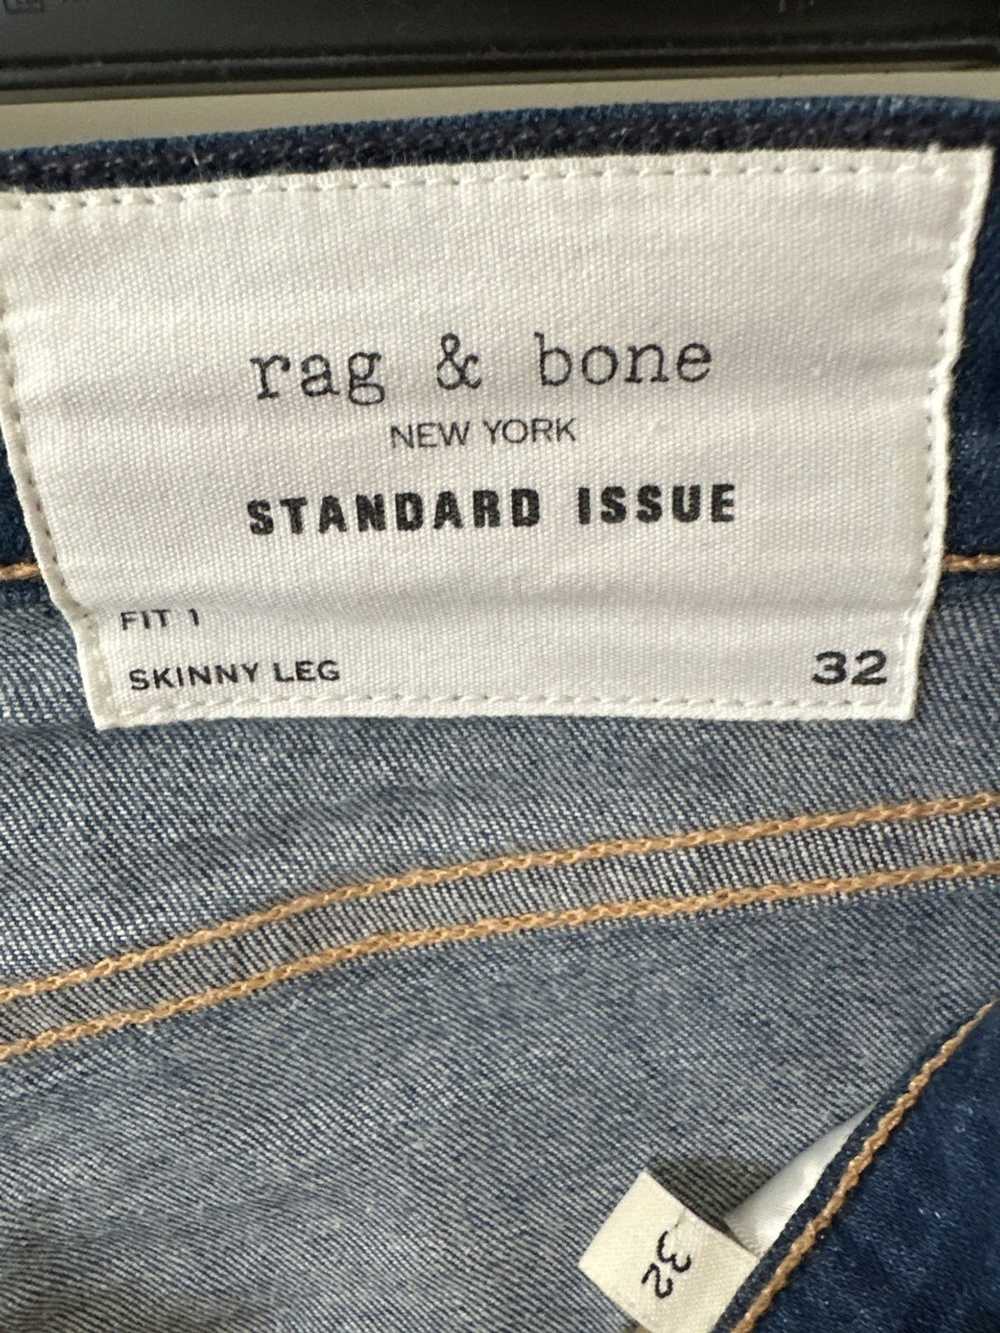 Rag & Bone Fit 1 rag and bone - image 2